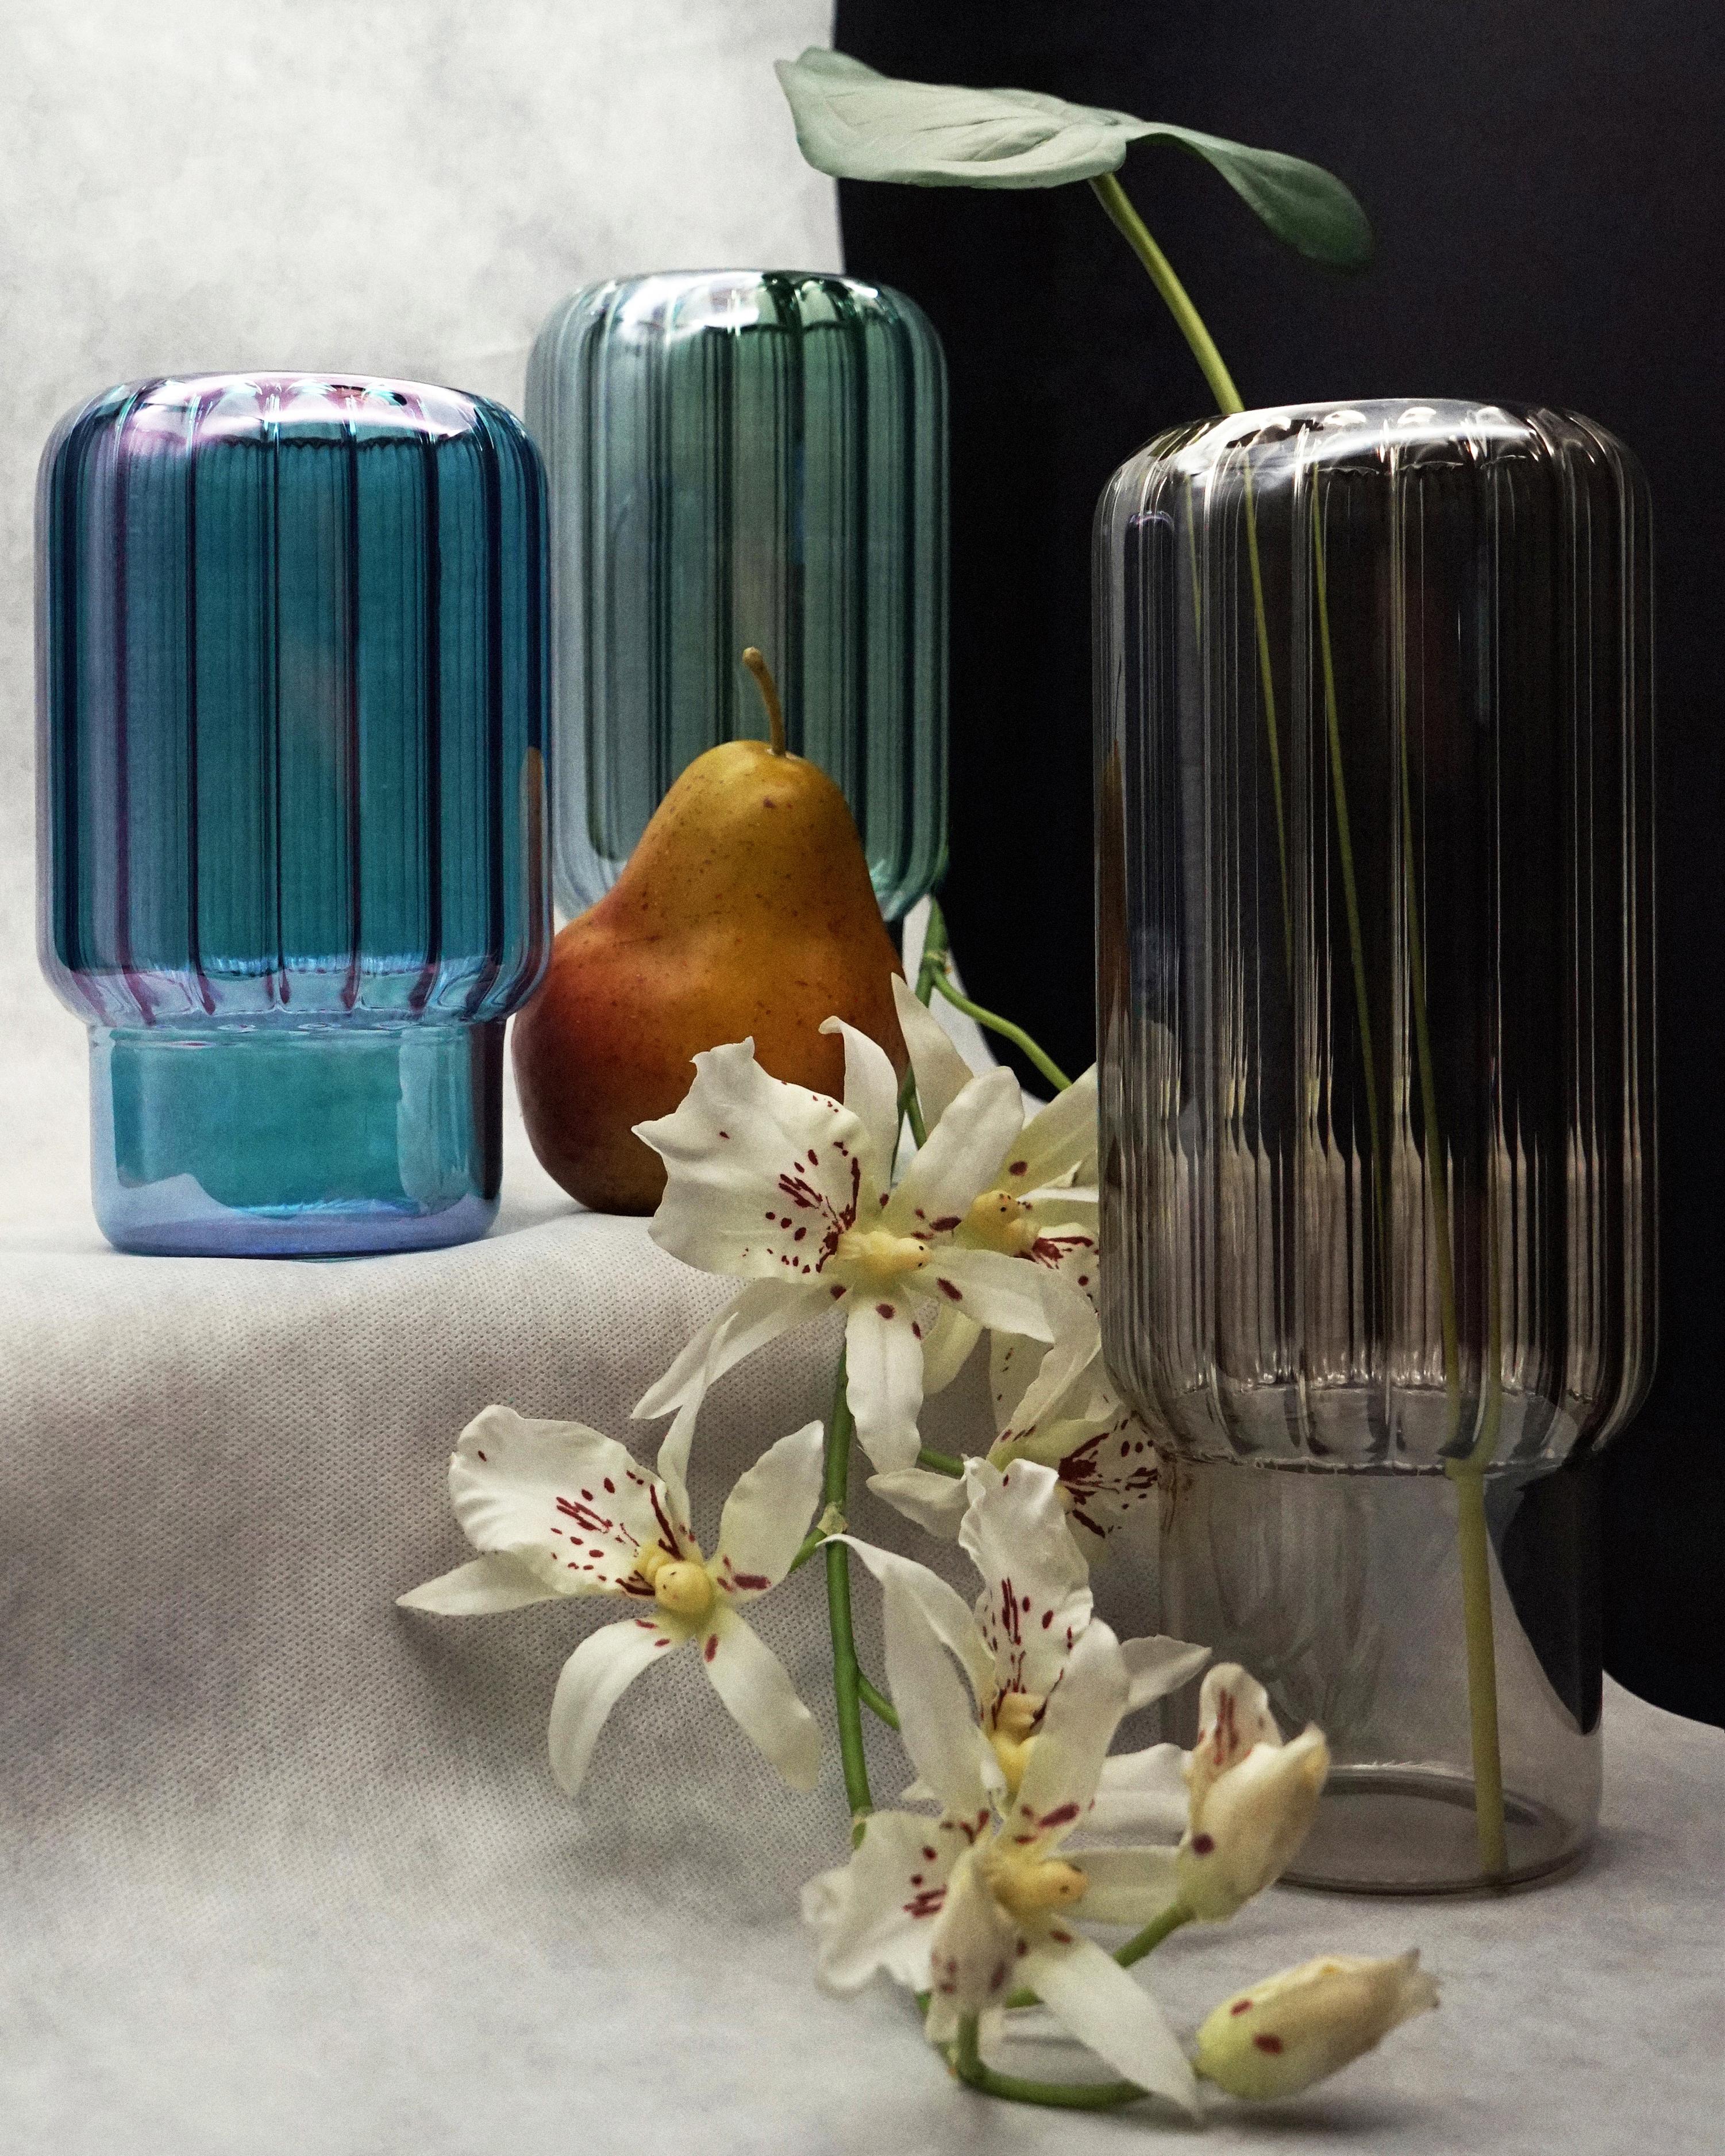 Italian 21st Century Handcrafted Glass Vase BRUMMA Medium, Green Color, Medium, Kanz  For Sale